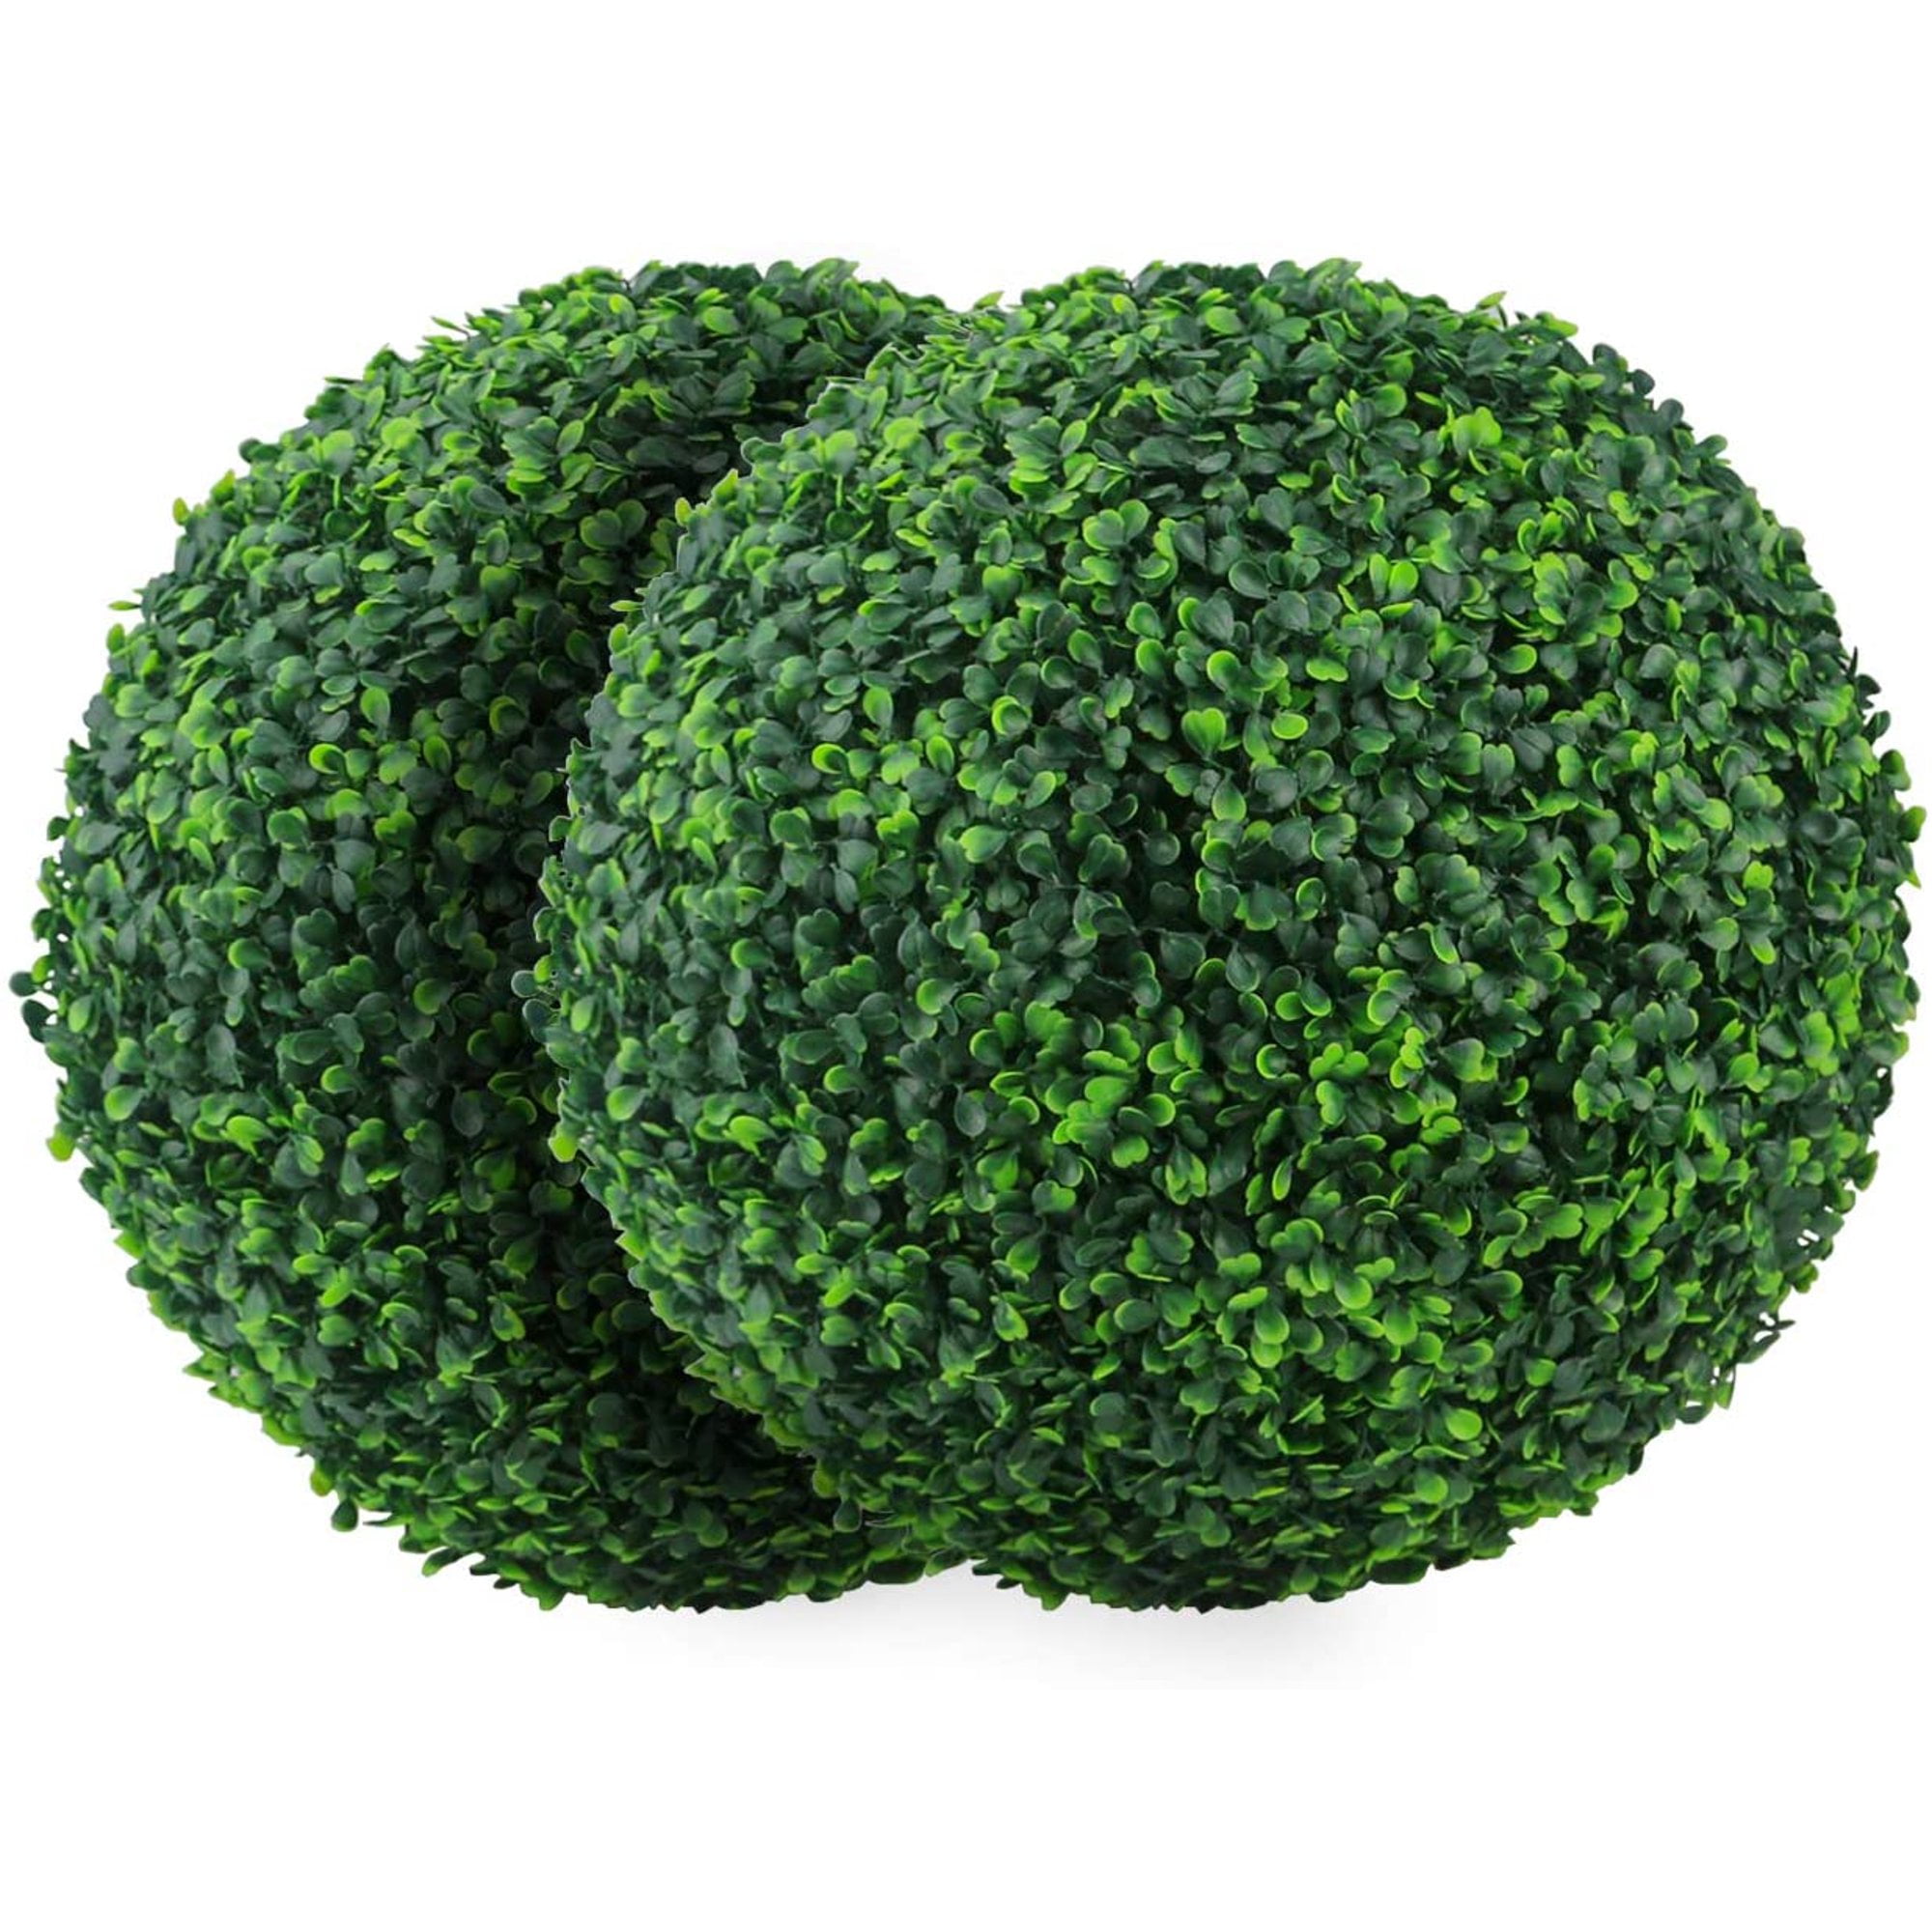 Garneck Decor Topiary Balls Fake Balls Artificial Plant Topiary Ball  Simulation Plant Balls Greenery Balls Fake Plant Balls vase Filler Garden  Sphere